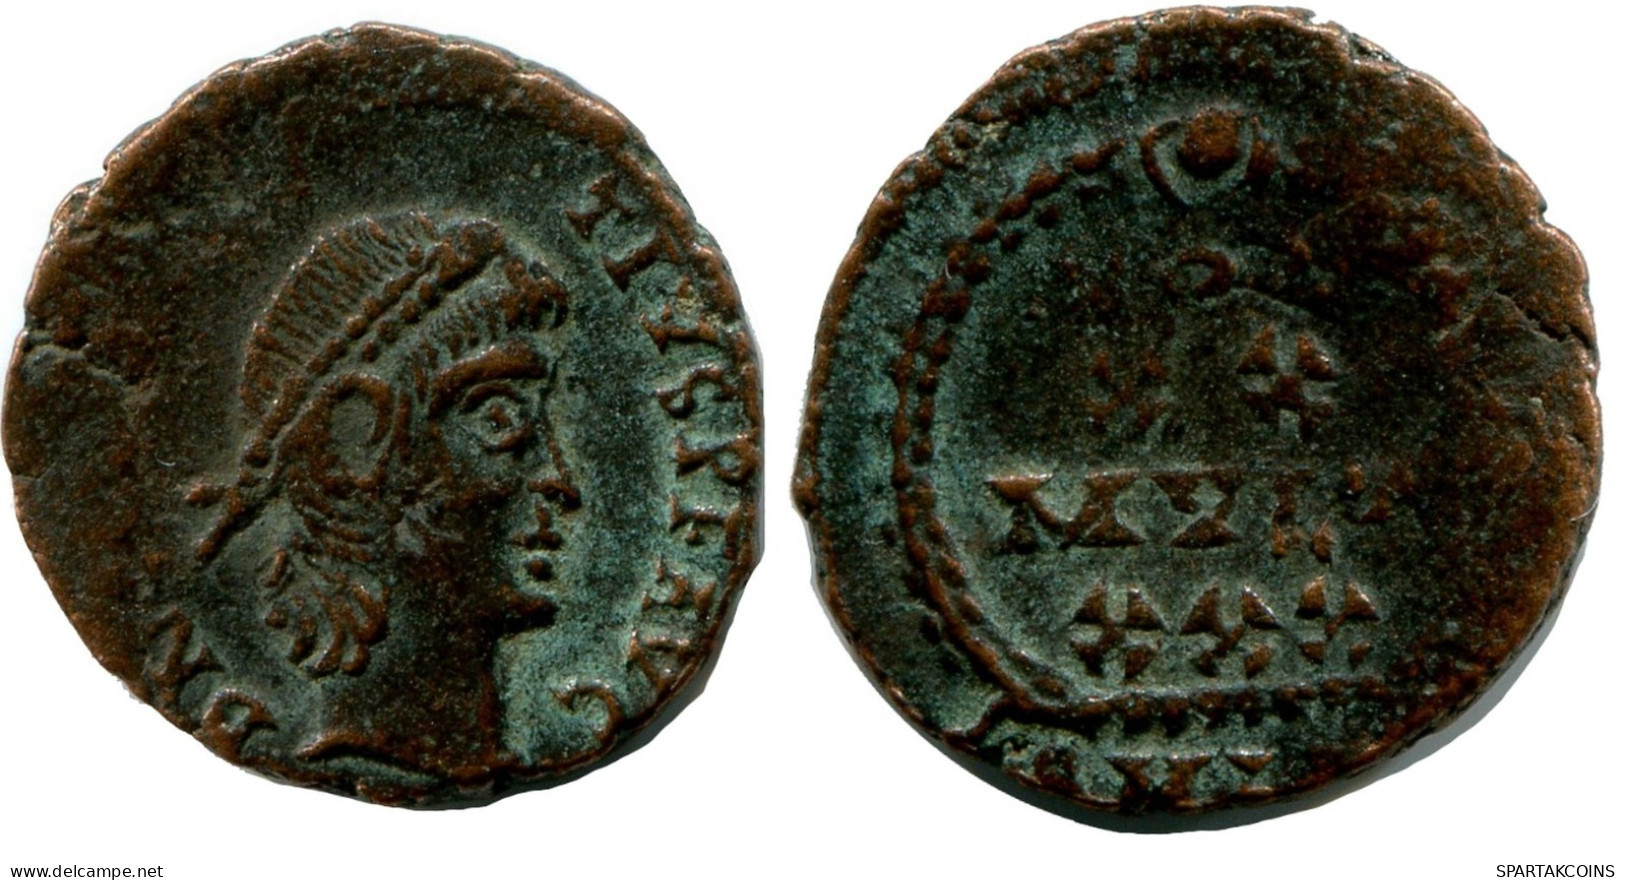 CONSTANTIUS II MINTED IN ALEKSANDRIA FOUND IN IHNASYAH HOARD #ANC10219.14.E.A - The Christian Empire (307 AD To 363 AD)